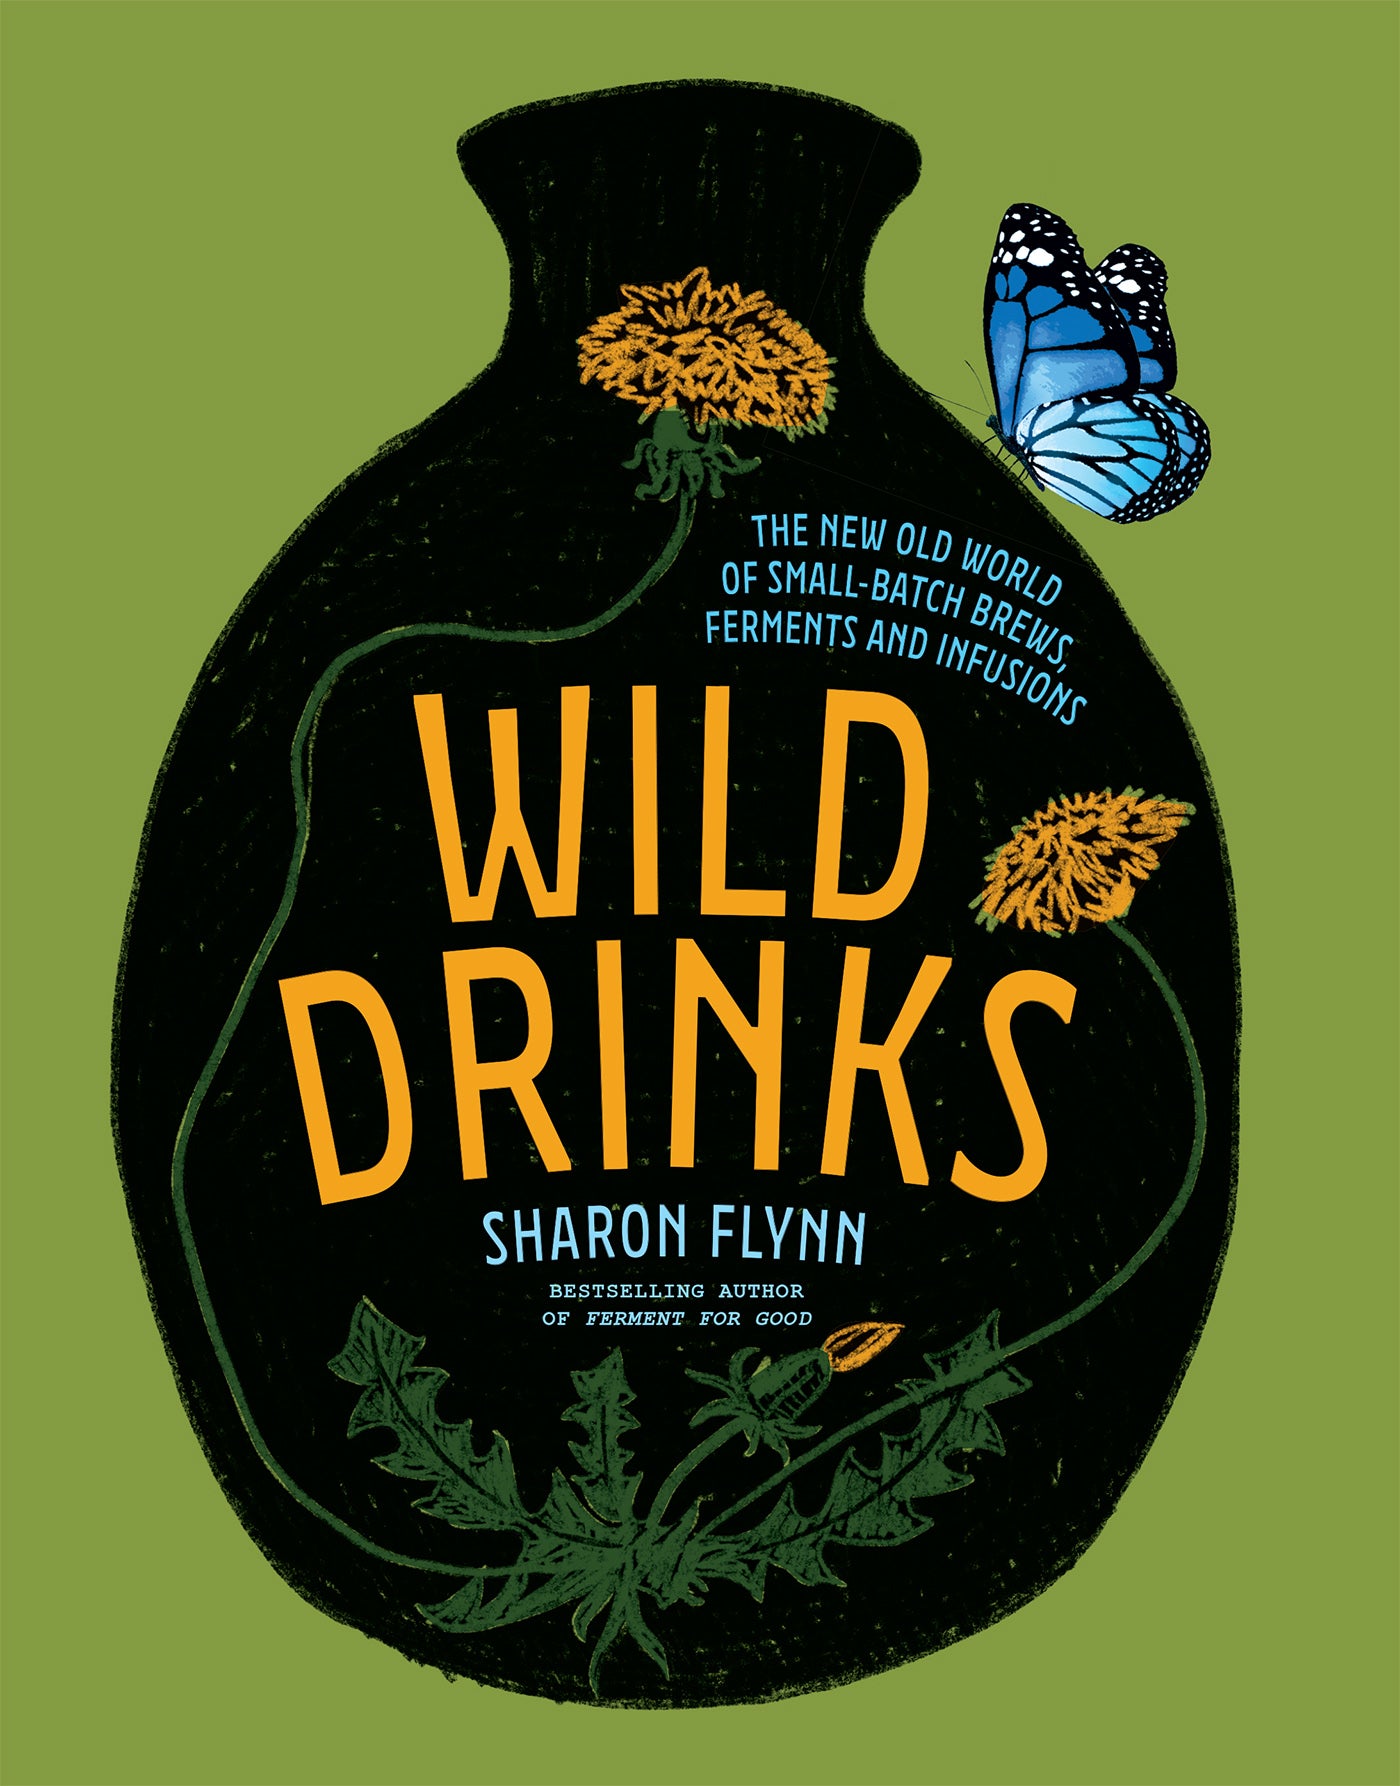 Wild Drinks by Sharon Flynn